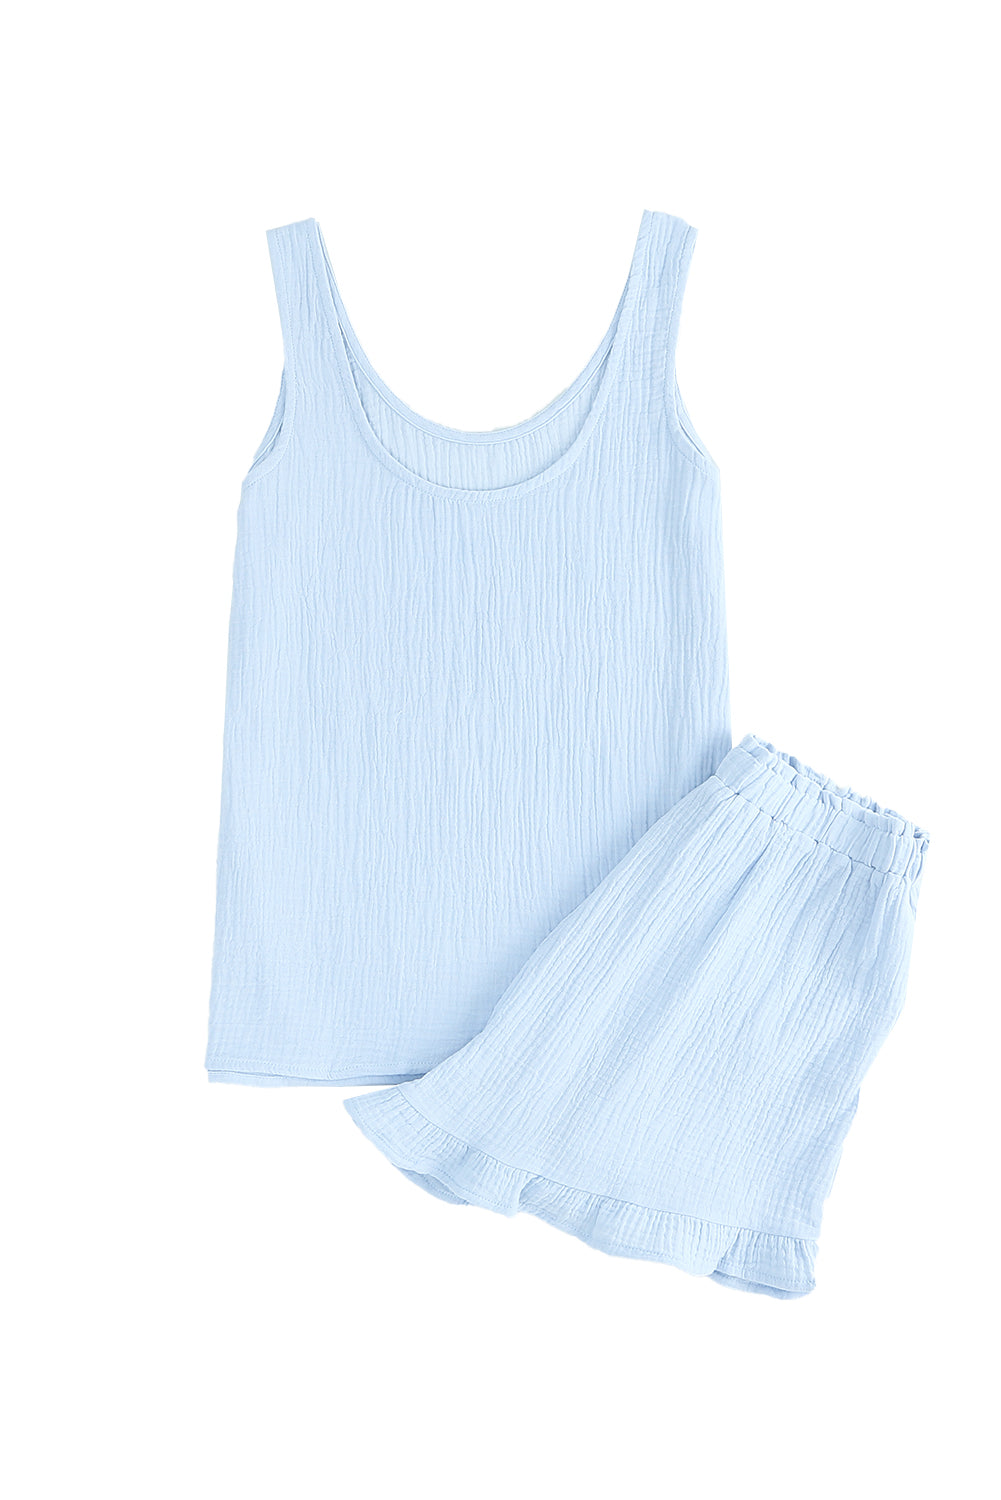 Sky Blue Textured U Neck Tank Top and High Waist Shorts Set Short Sets JT's Designer Fashion